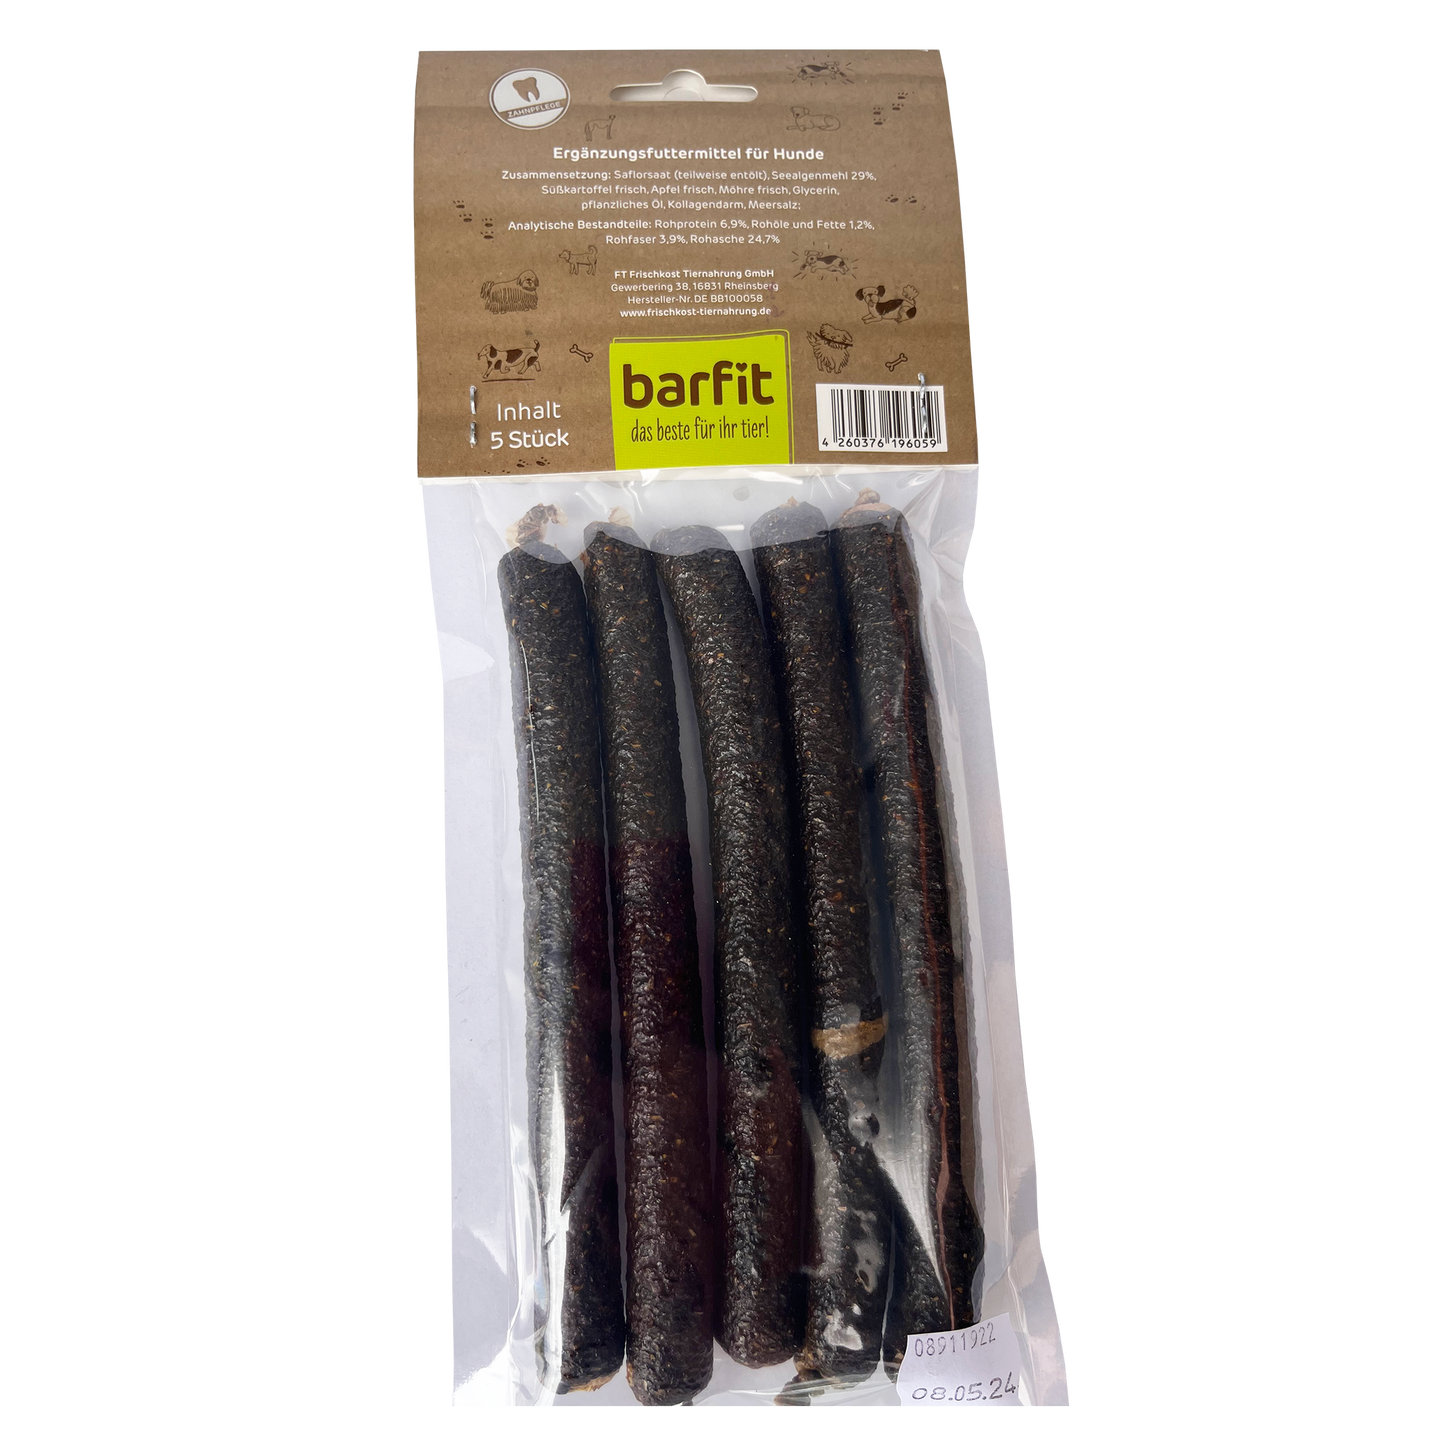 Barfit “The Sausage” Denta